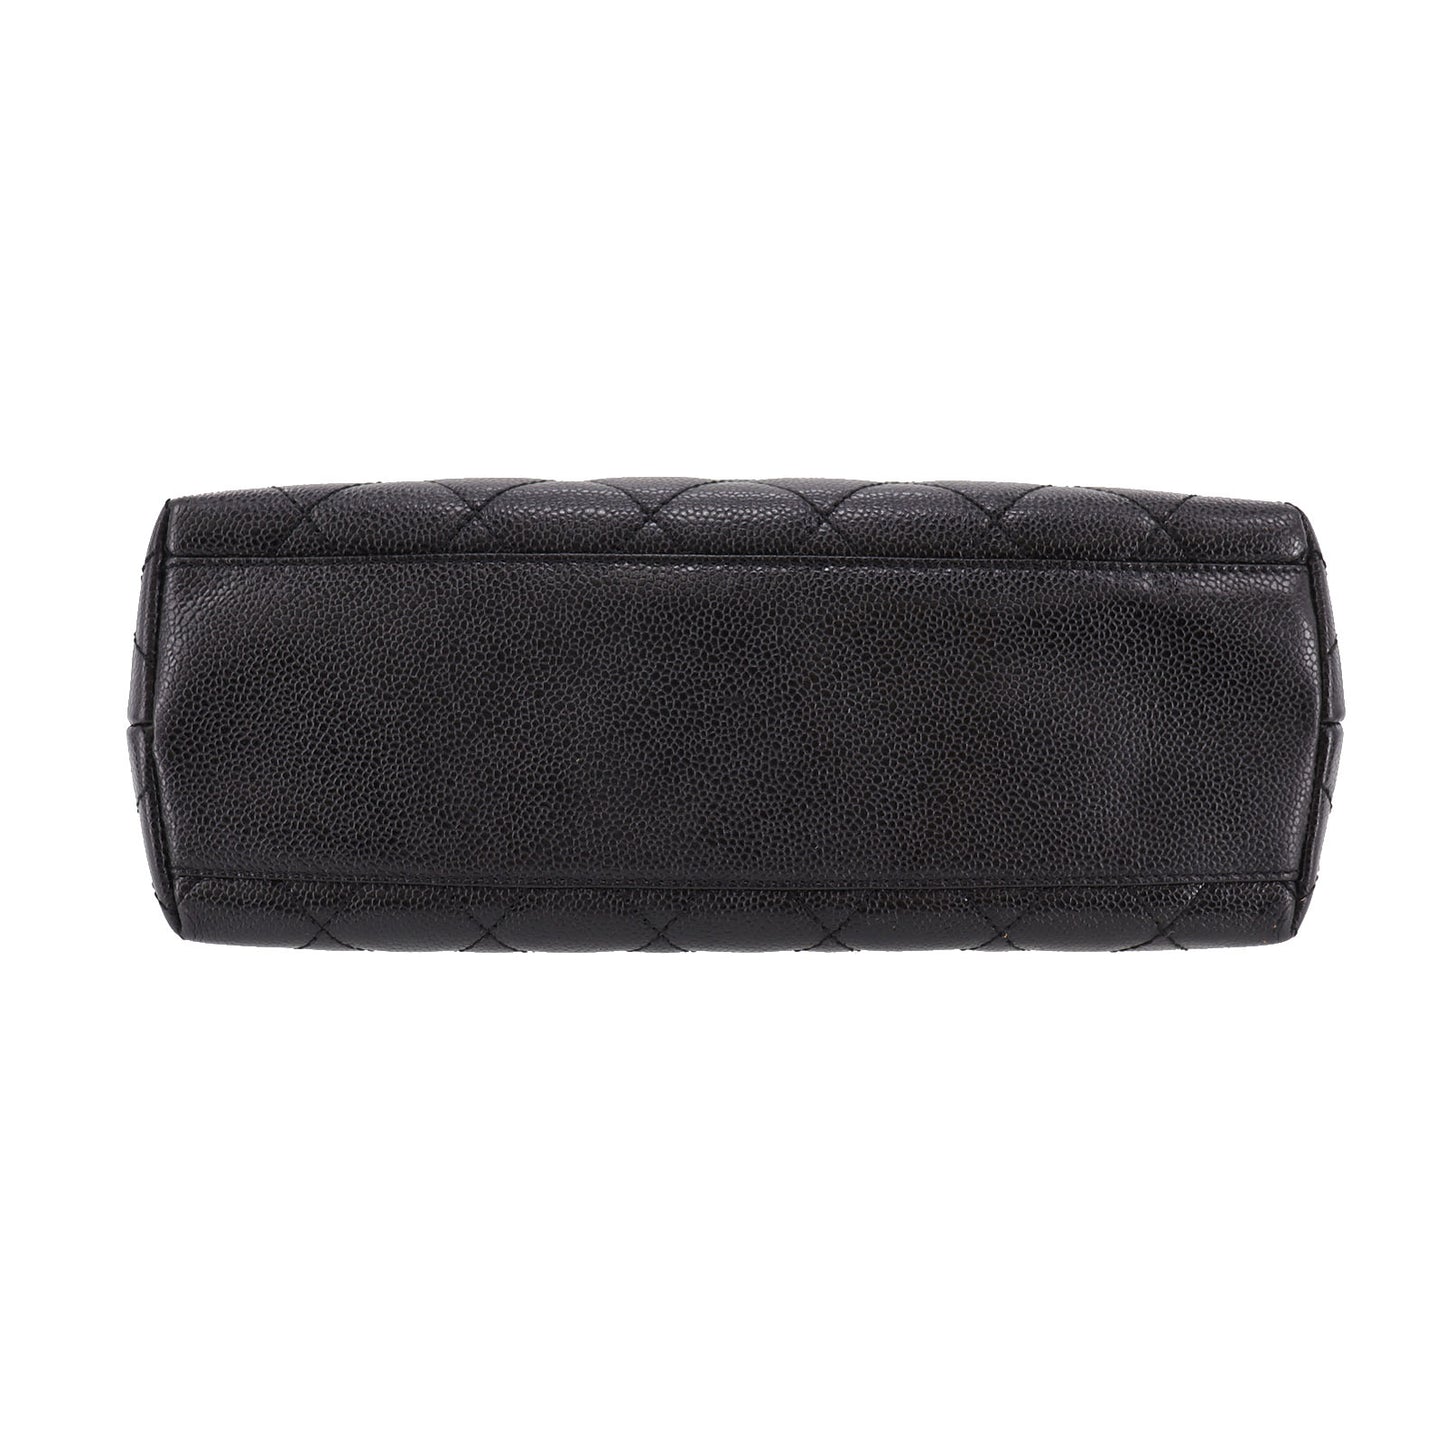 CHANEL CC Used Handbag Black Caviar Skin Leather #CE208